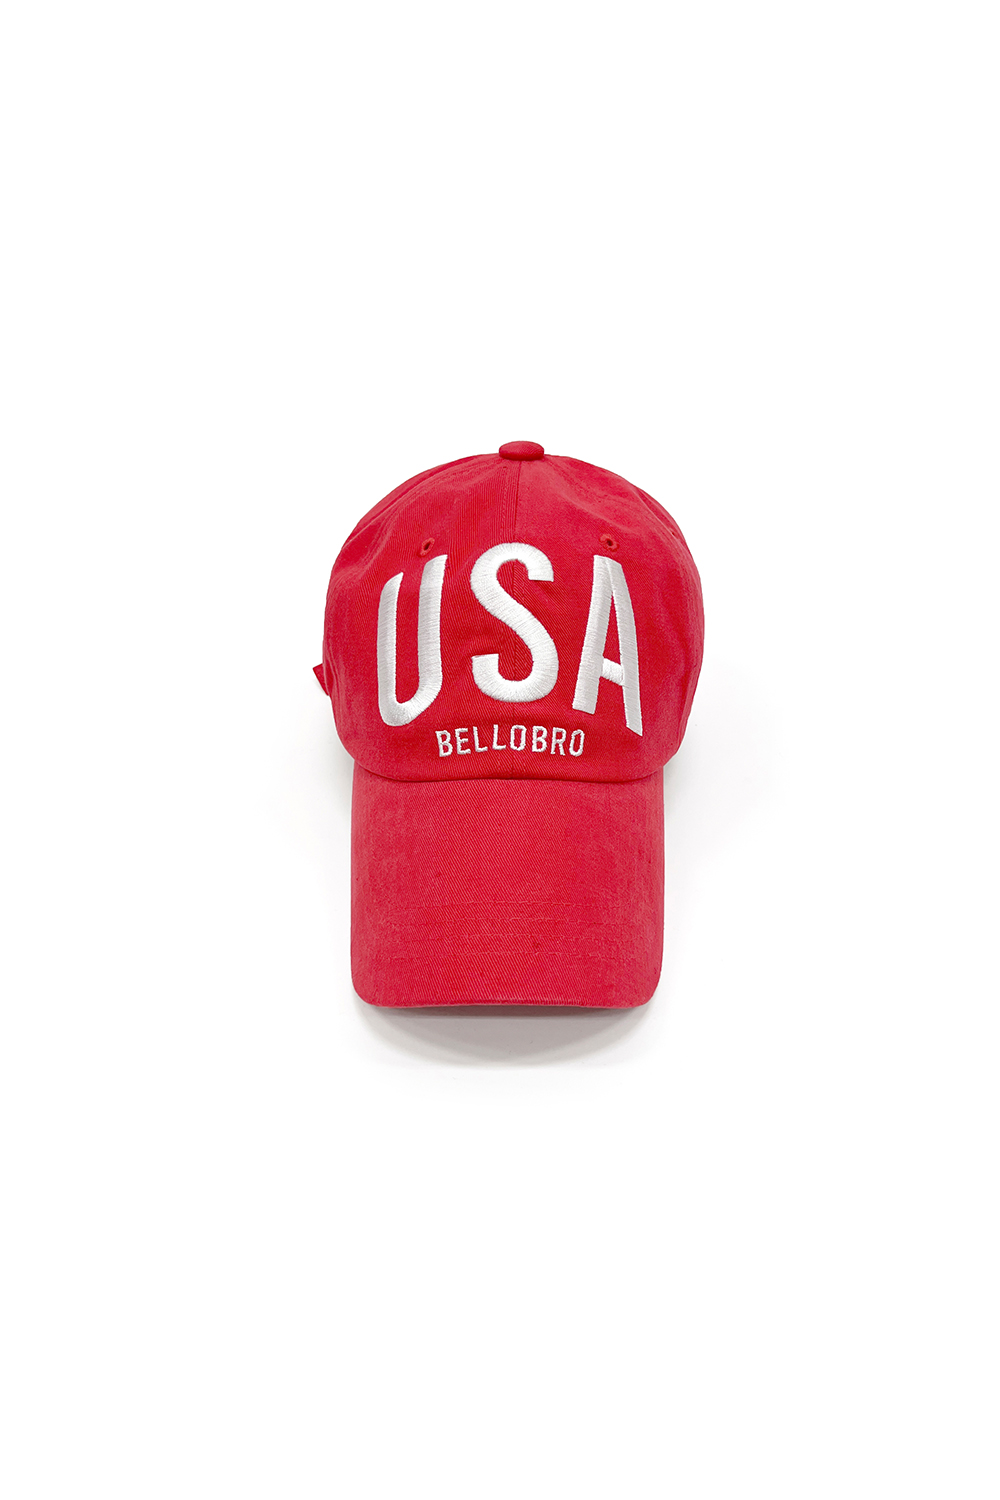 USA cap (red)